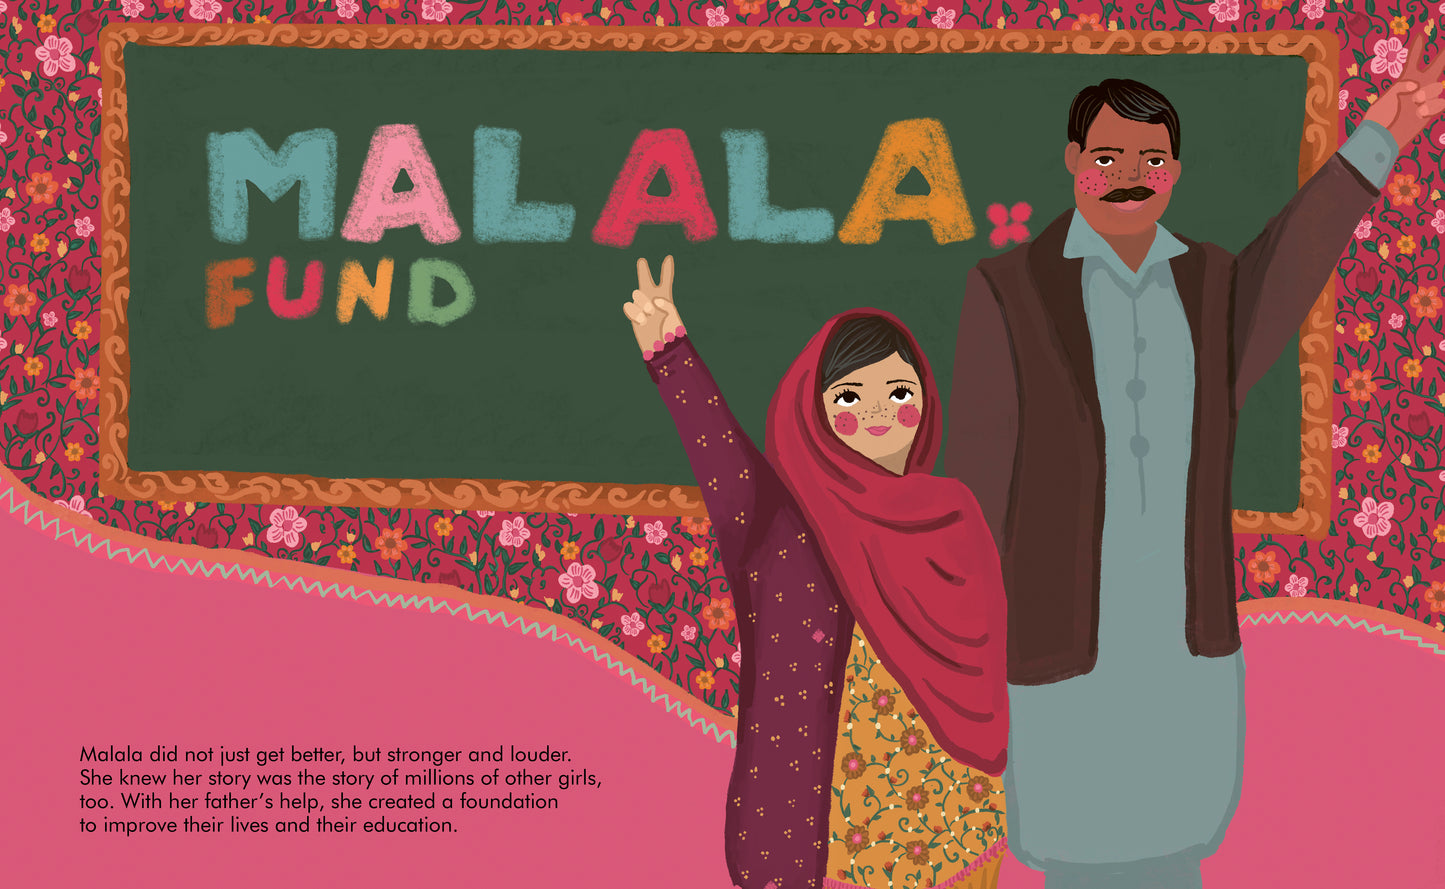 Malala Yousafzai | Maria Isabel Sanchez Vegara